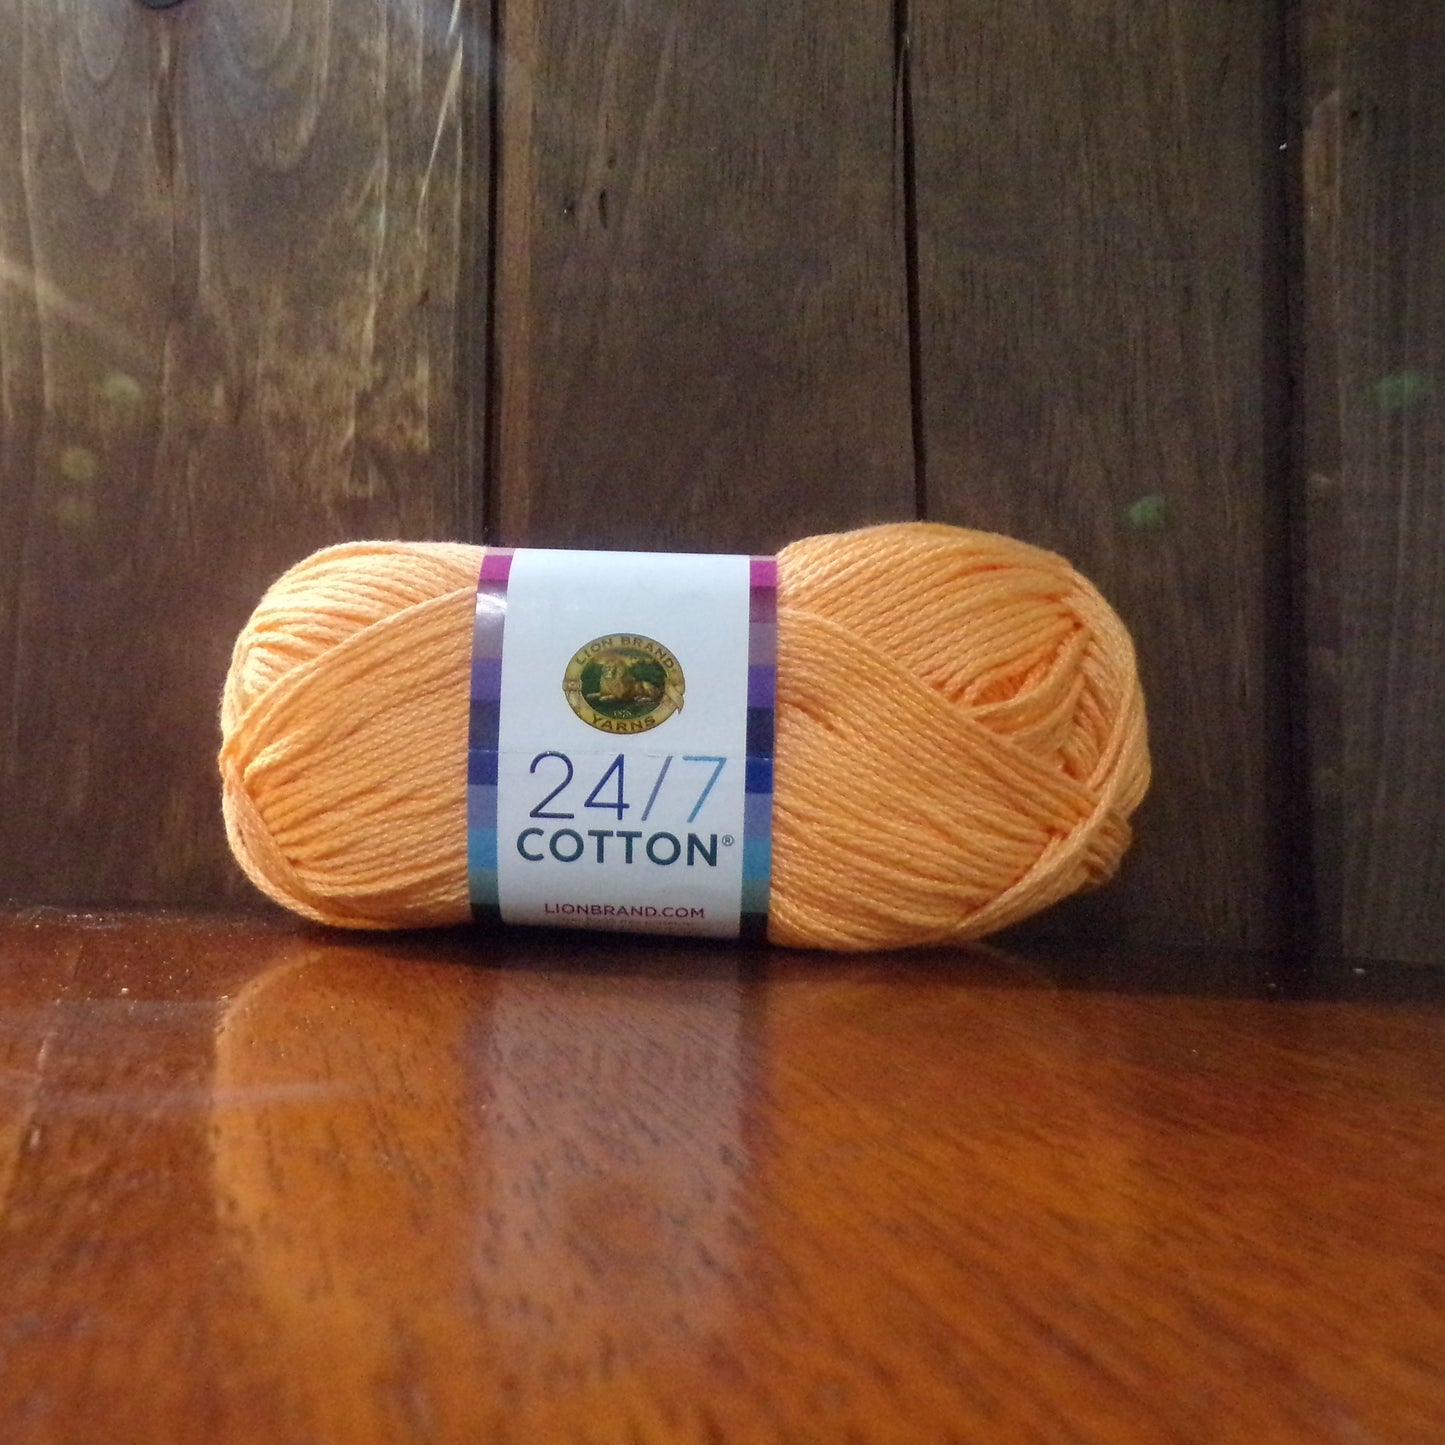 24/7 Cotton